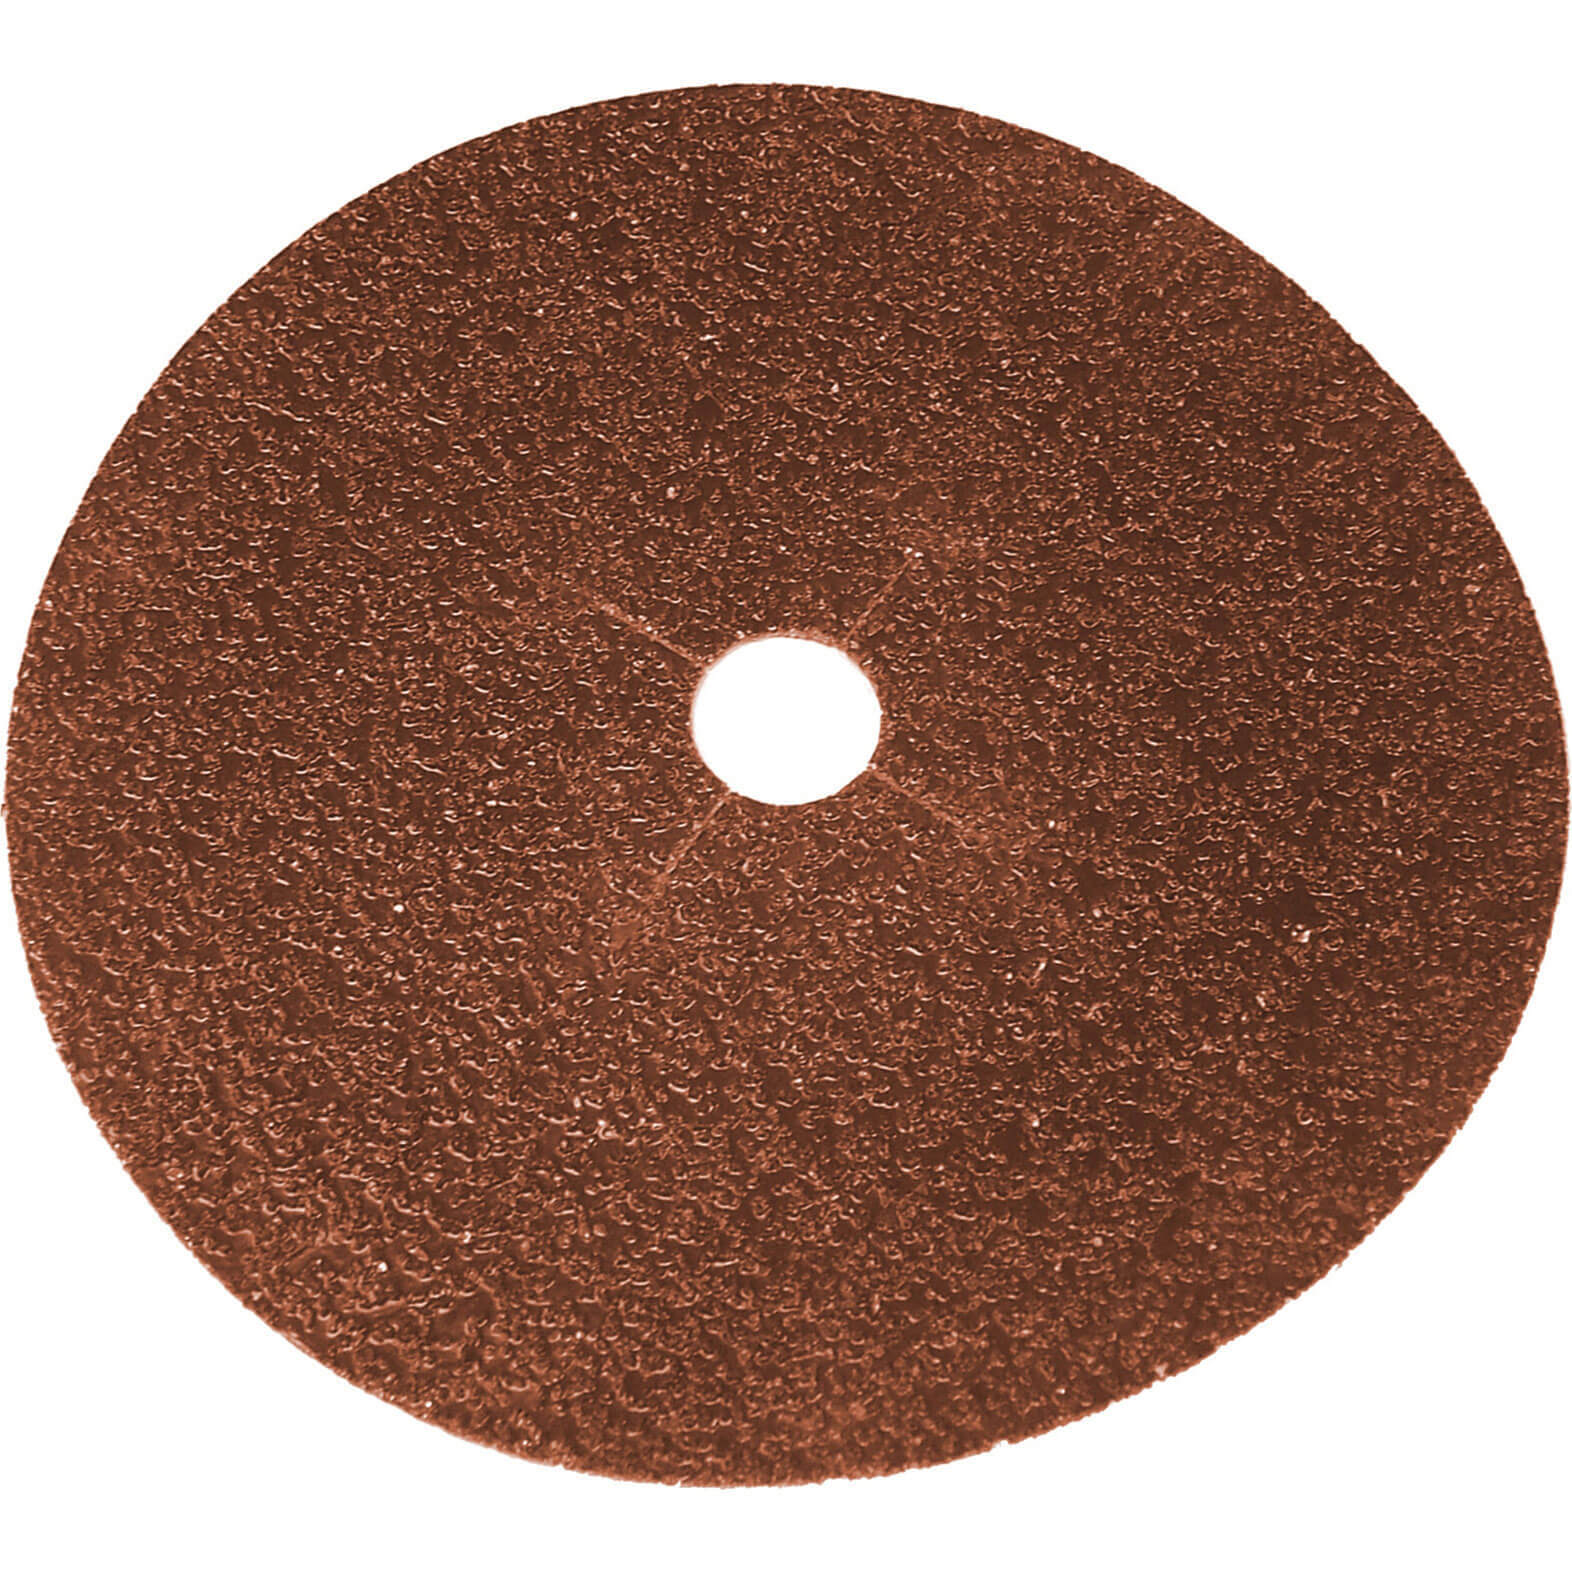 Photos - Abrasive Wheel / Belt Faithfull Aluminium Oxide Sanding Discs 178mm 40g ADFS17840 